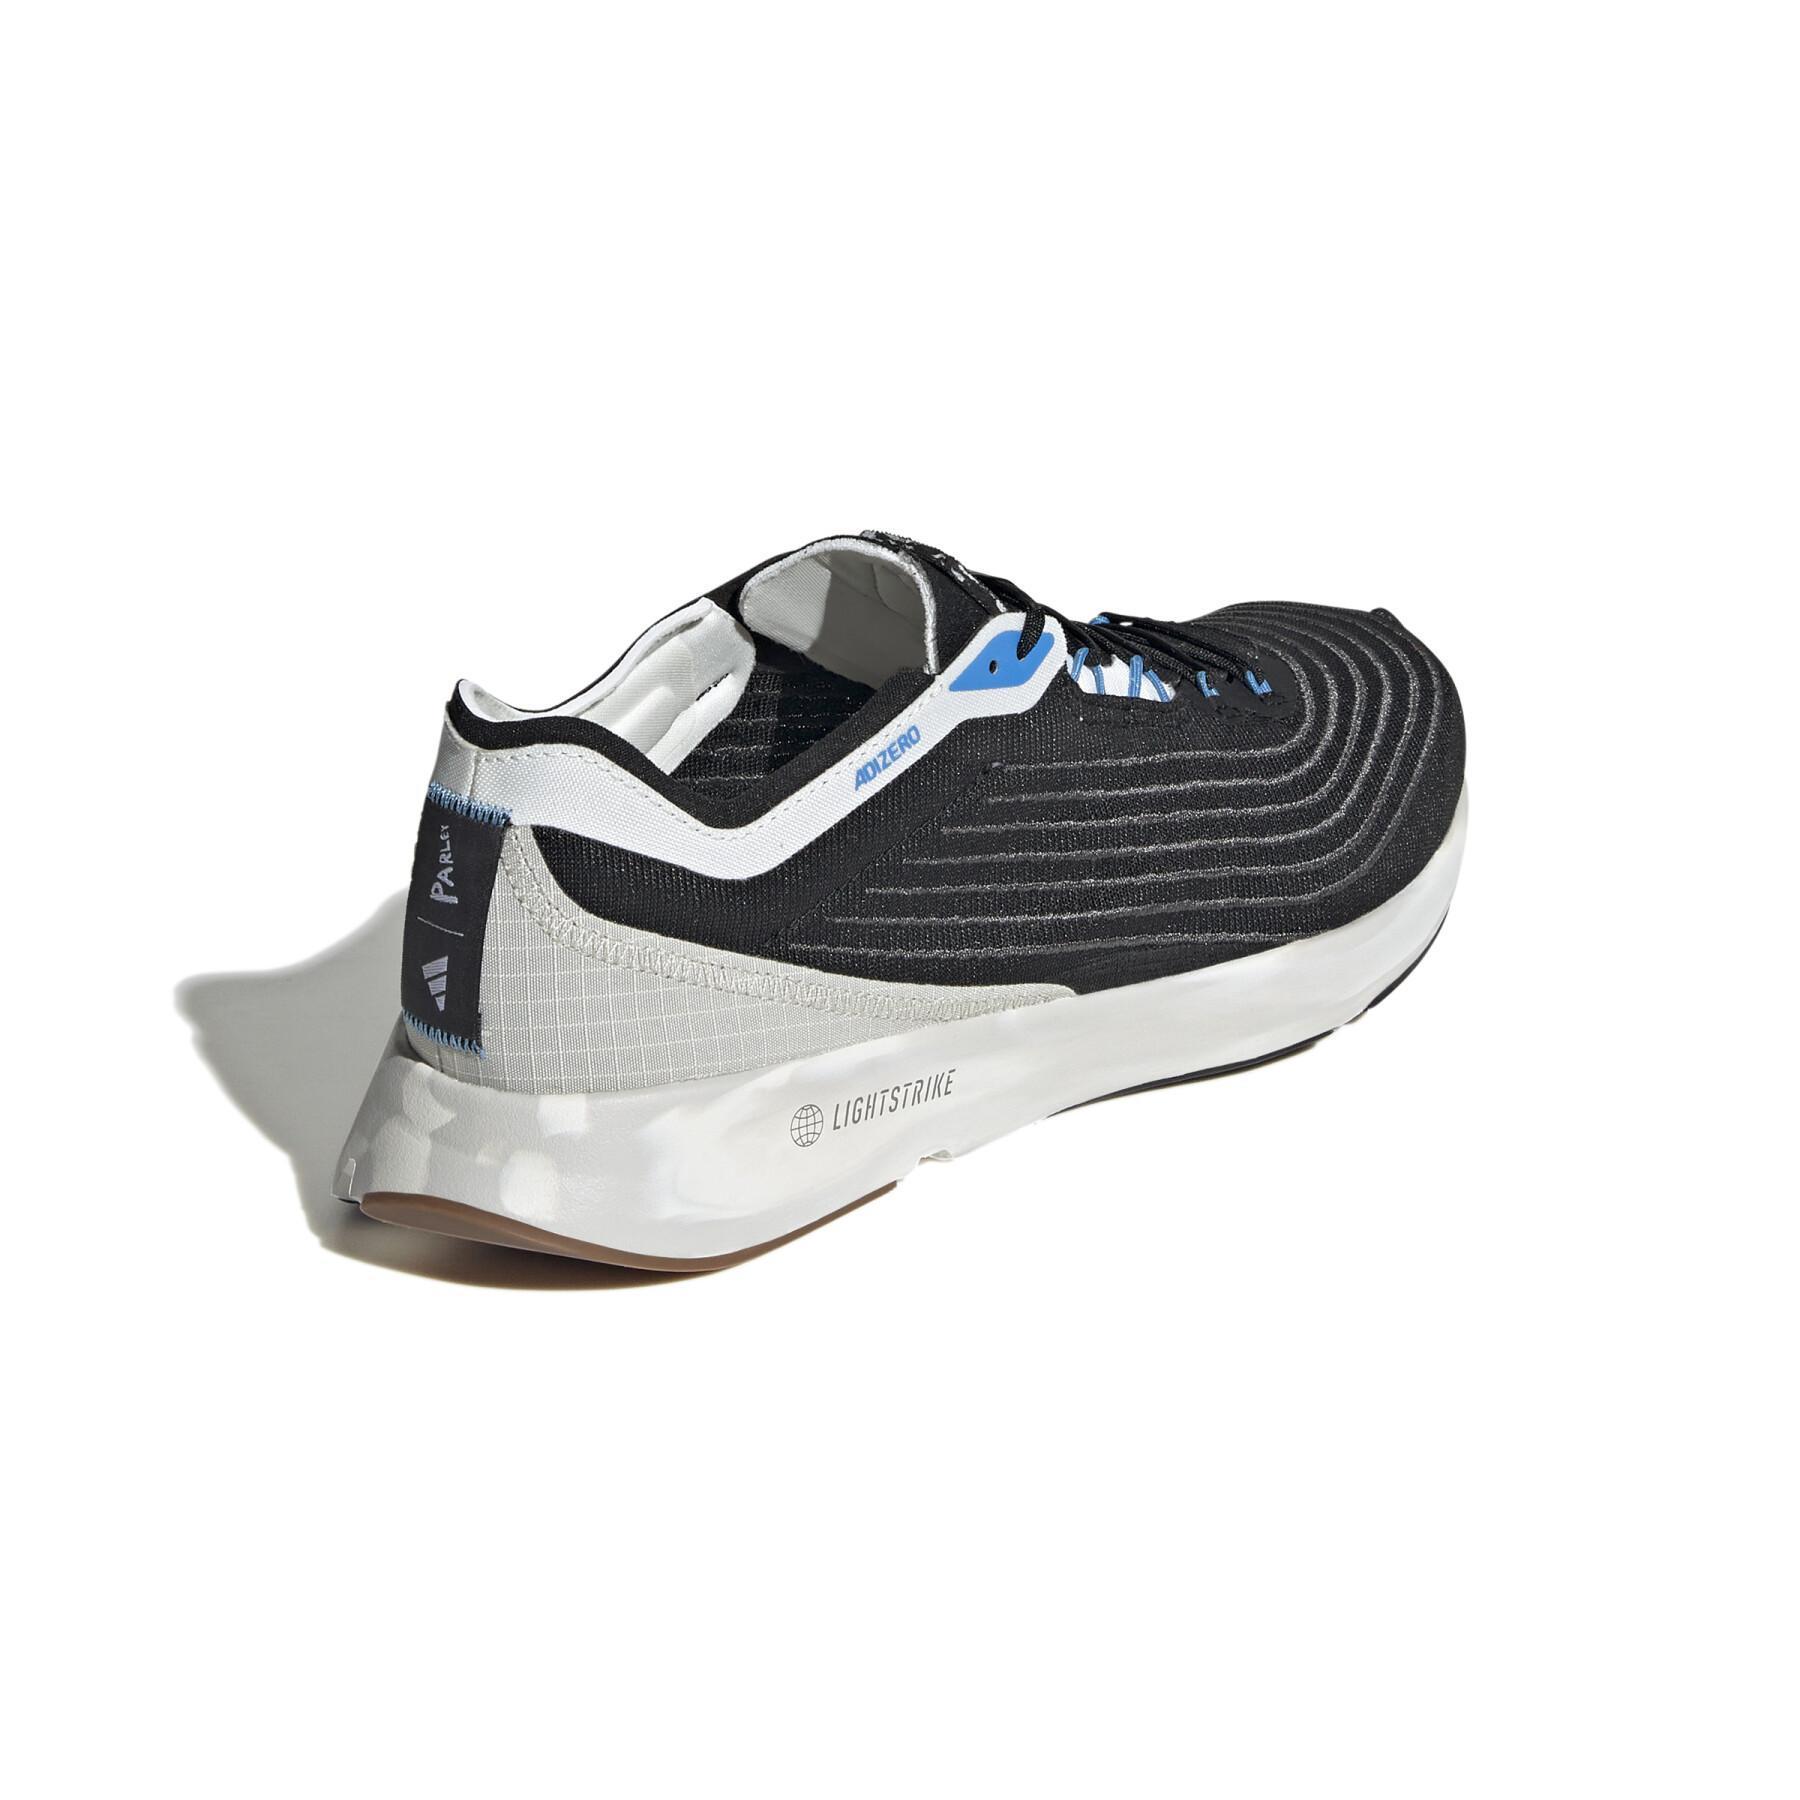 Running shoes adidas Parley X Adizero